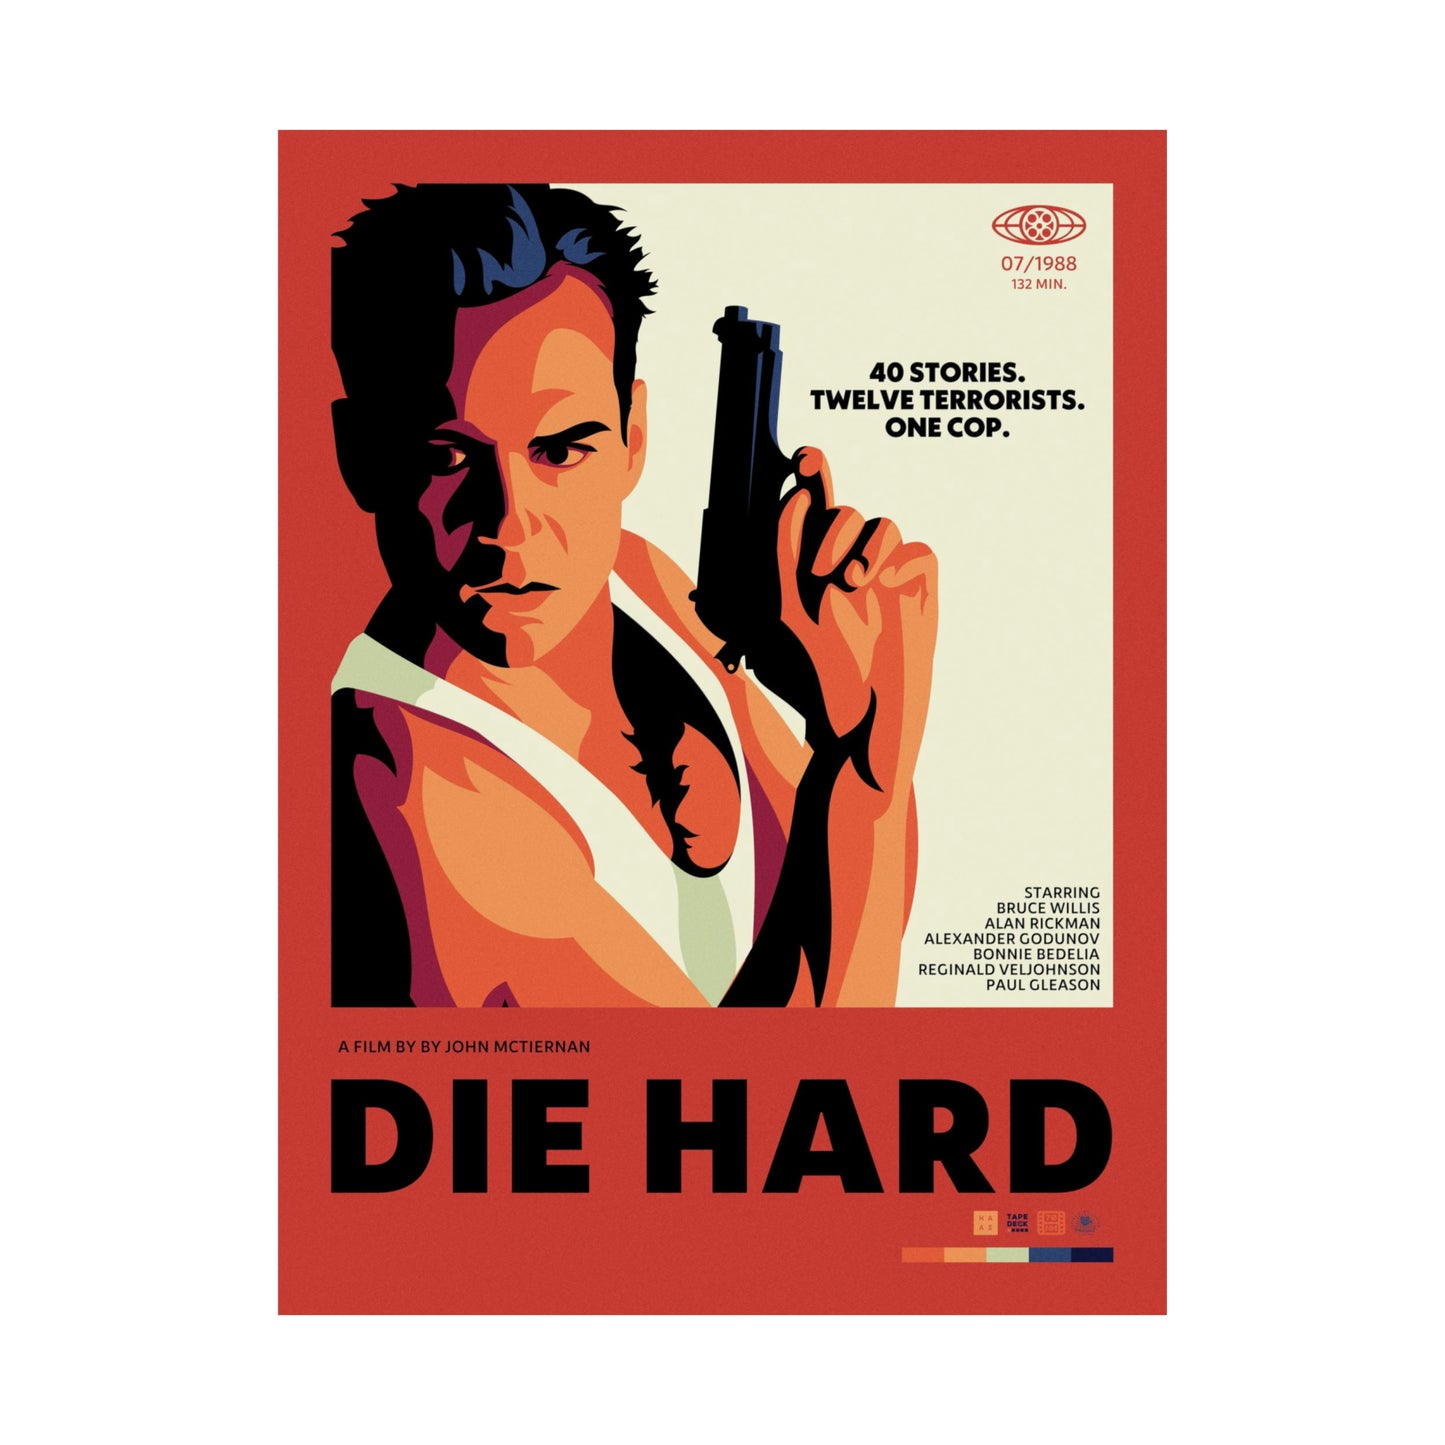 Bonus Episode: Die Hard